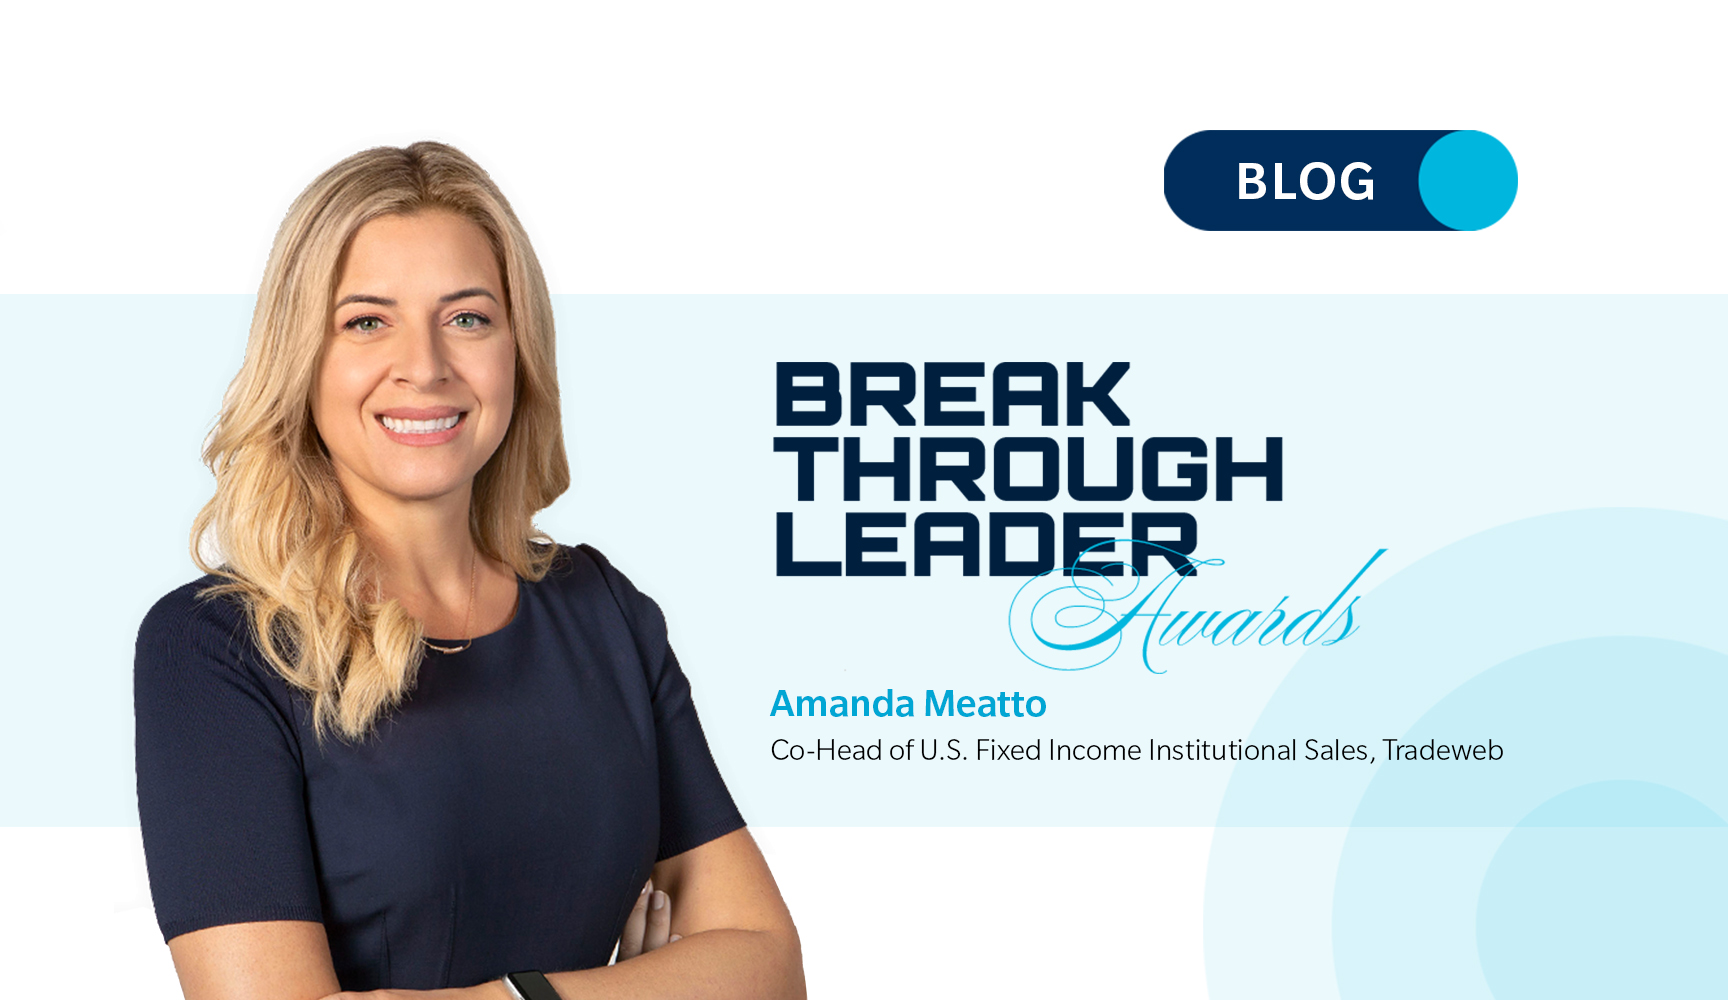 Break through awards blog